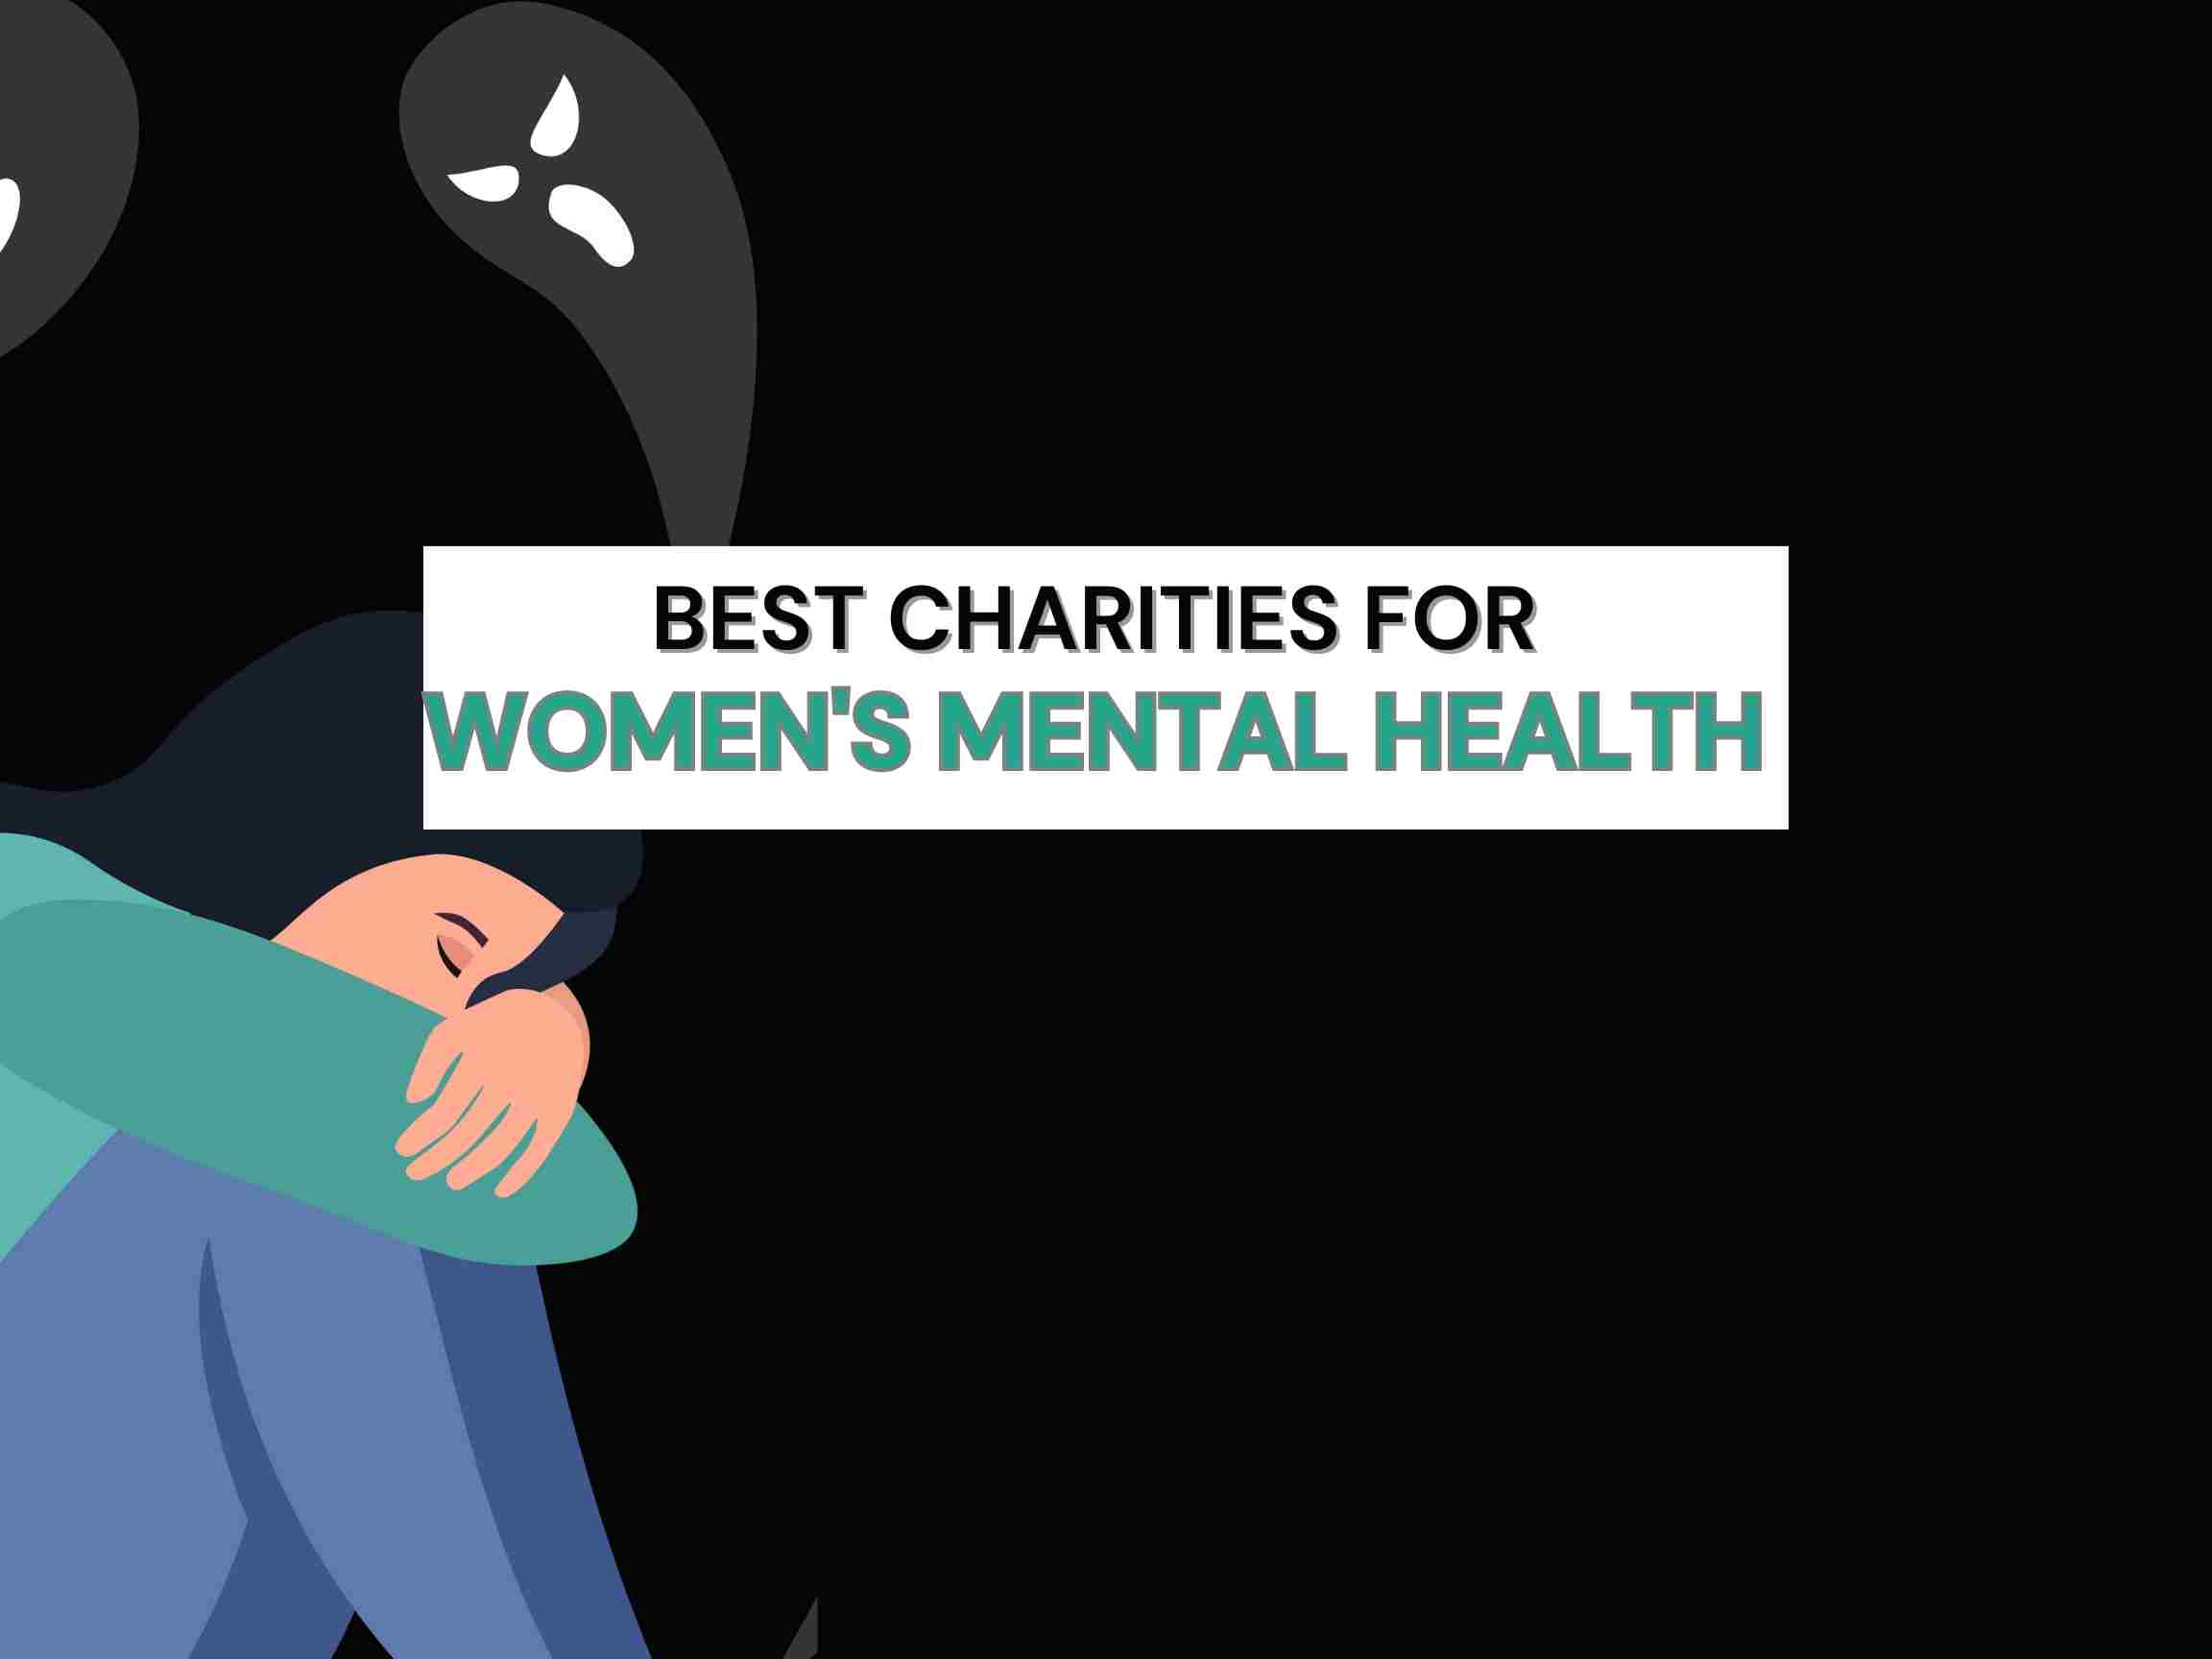 Best charities for women's mental health